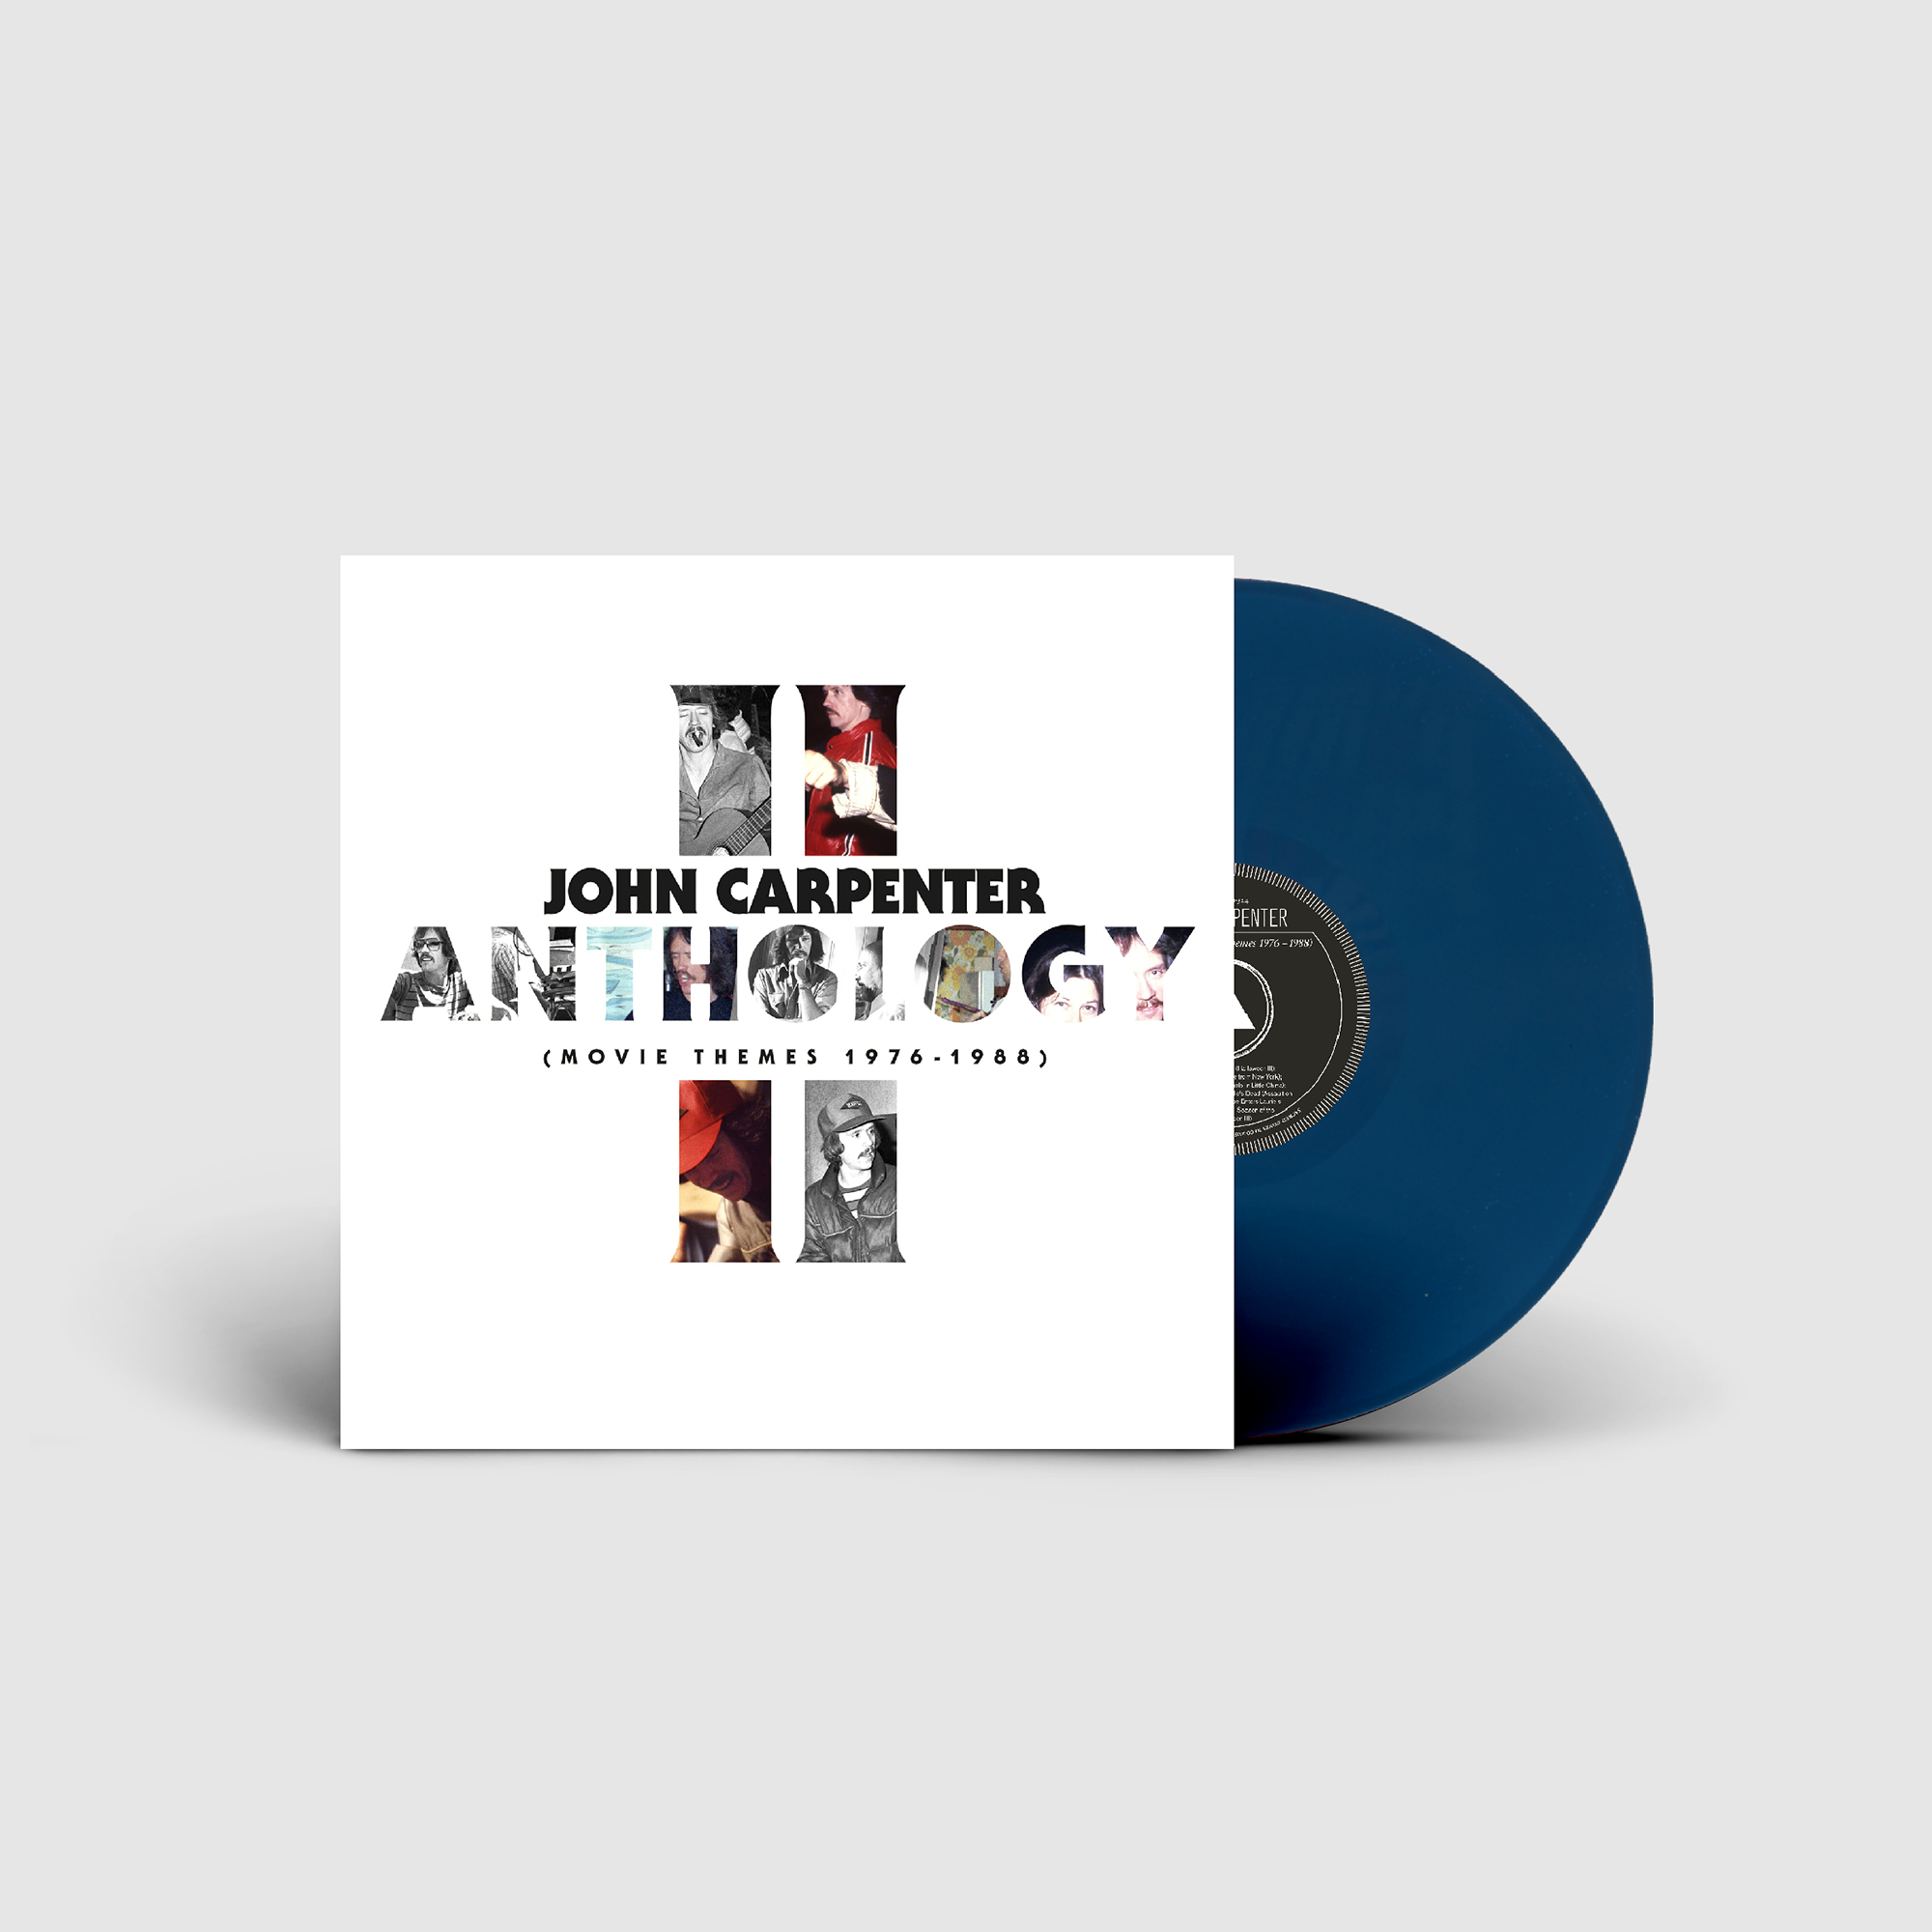 John Carpenter, Cody Carpenter and Daniel Davies - Anthology II (Movie  Themes 1976-1988): Limited Blue Vinyl LP - Sound of Vinyl